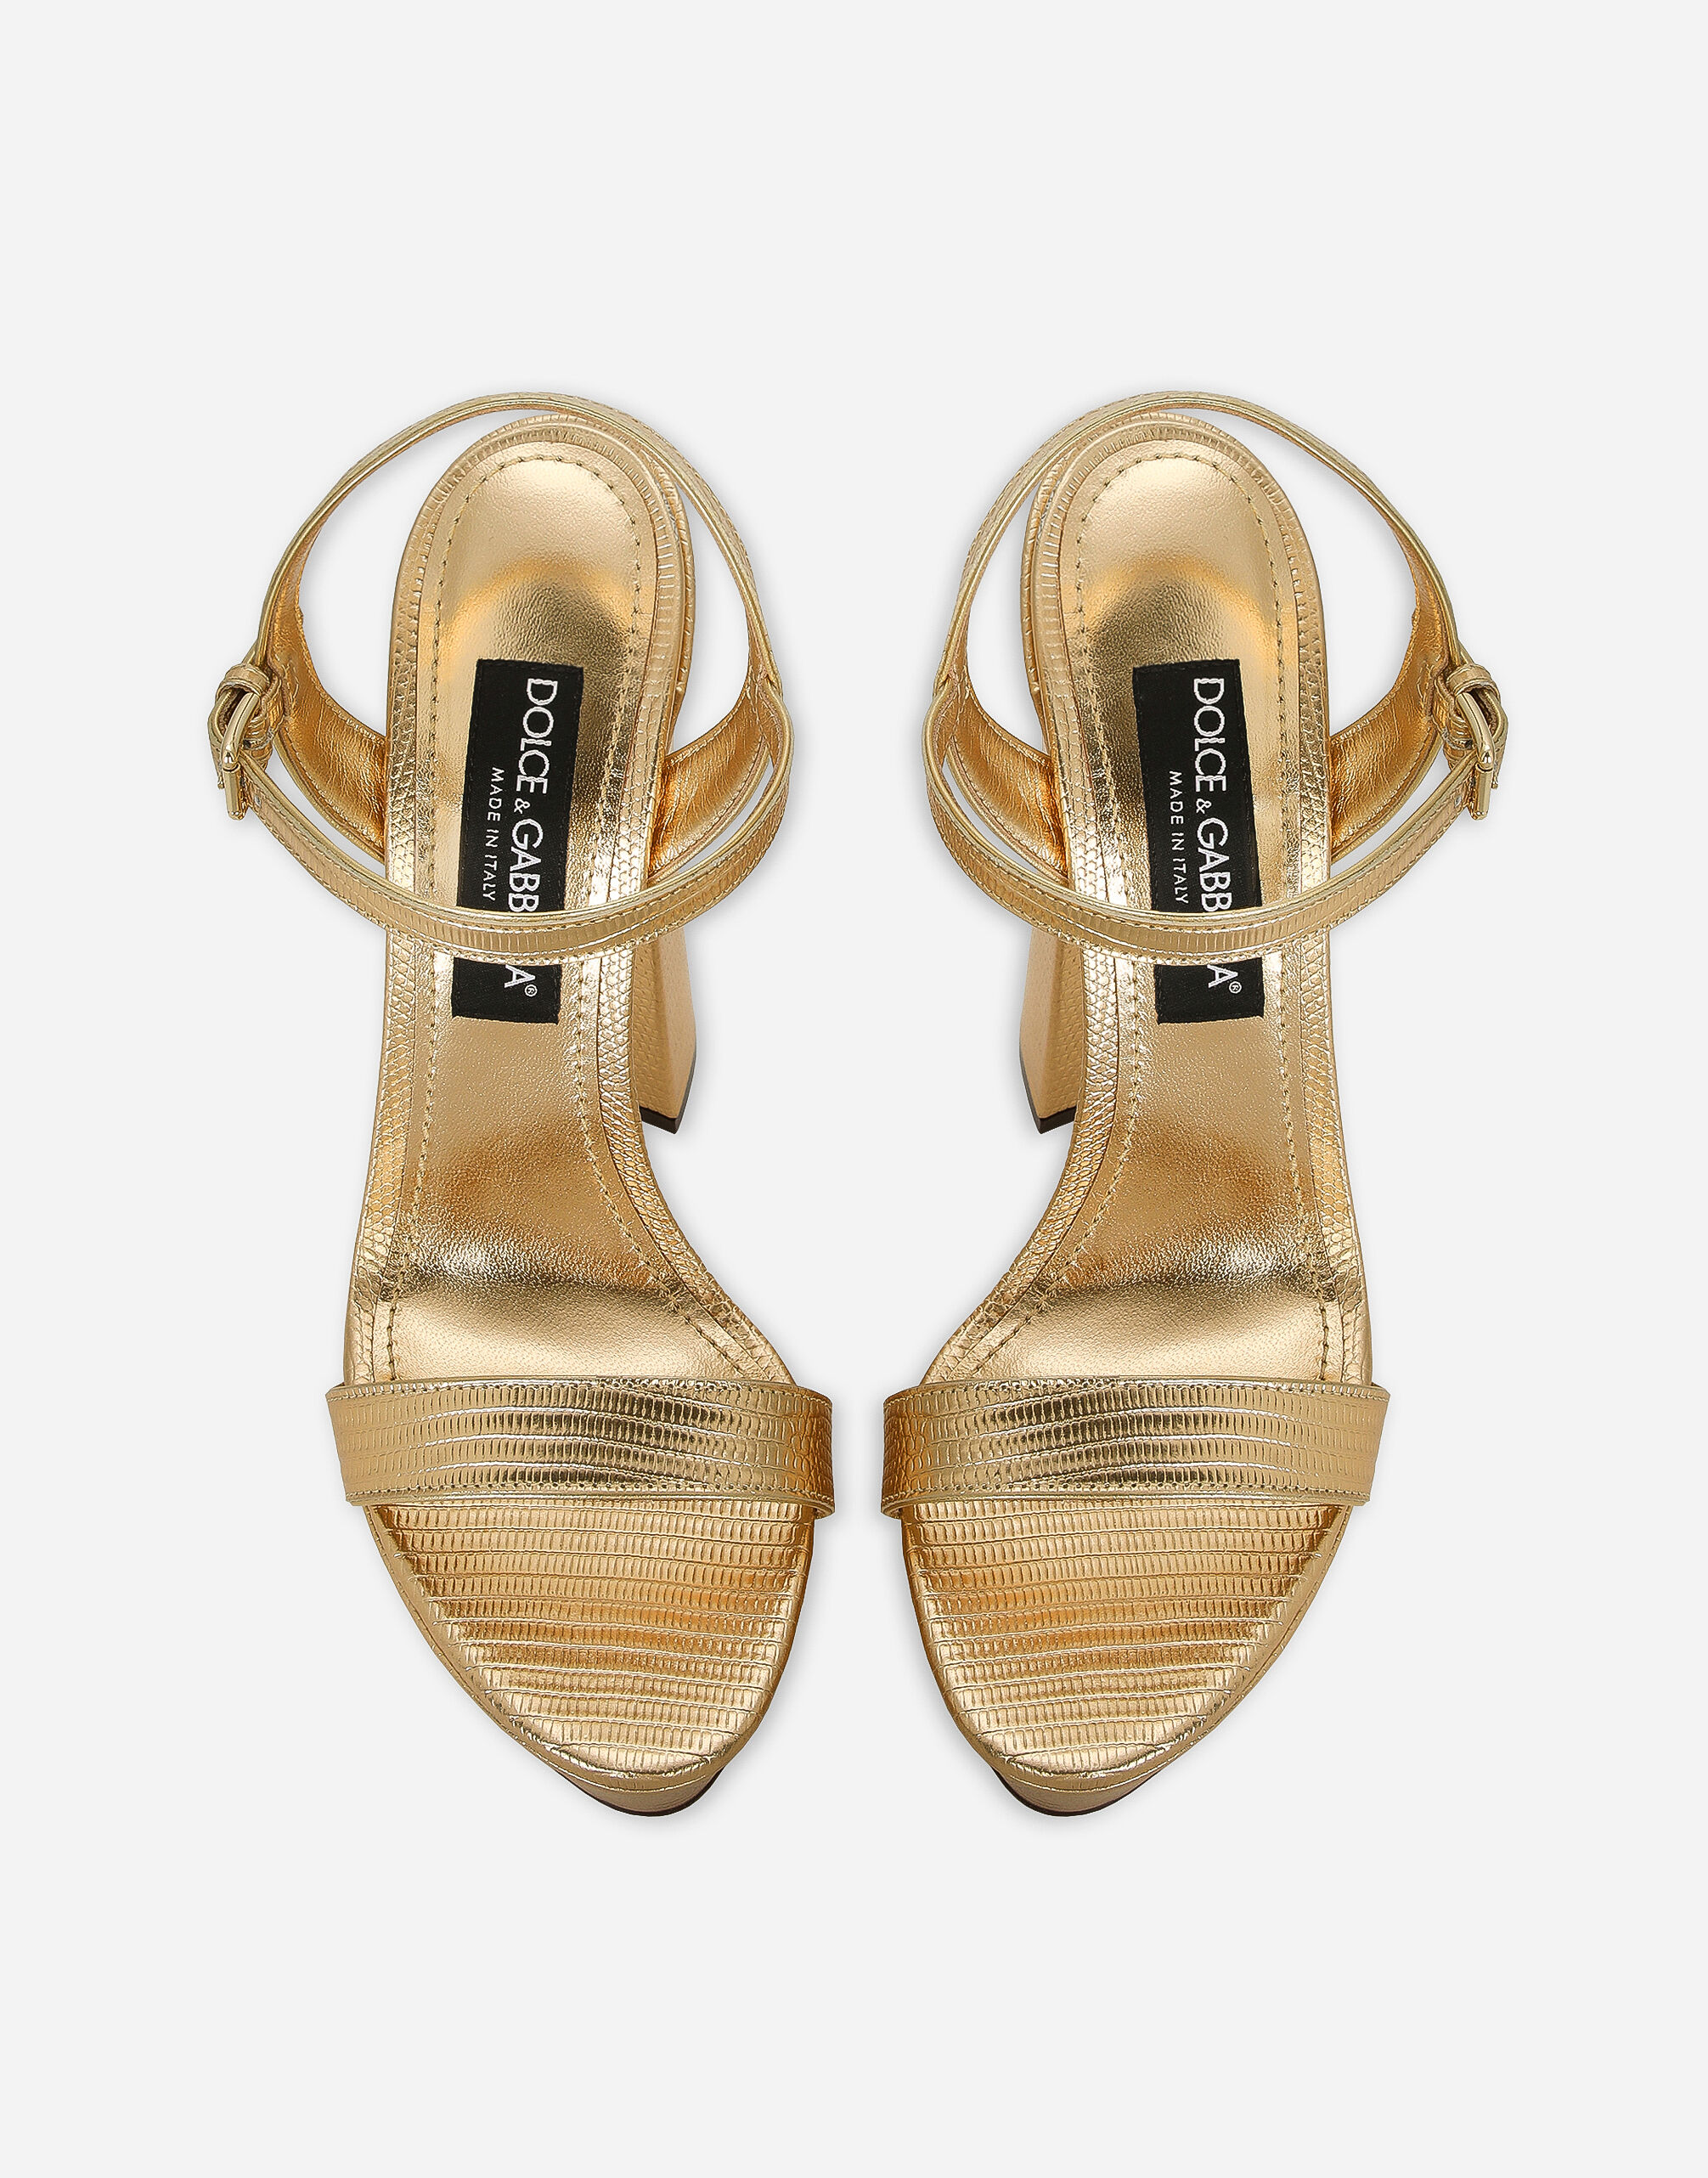 GenesinlifeShops Spain - Gold Heeled sandals Dolce & Gabbana - towel with  logo dolce gabbana towel